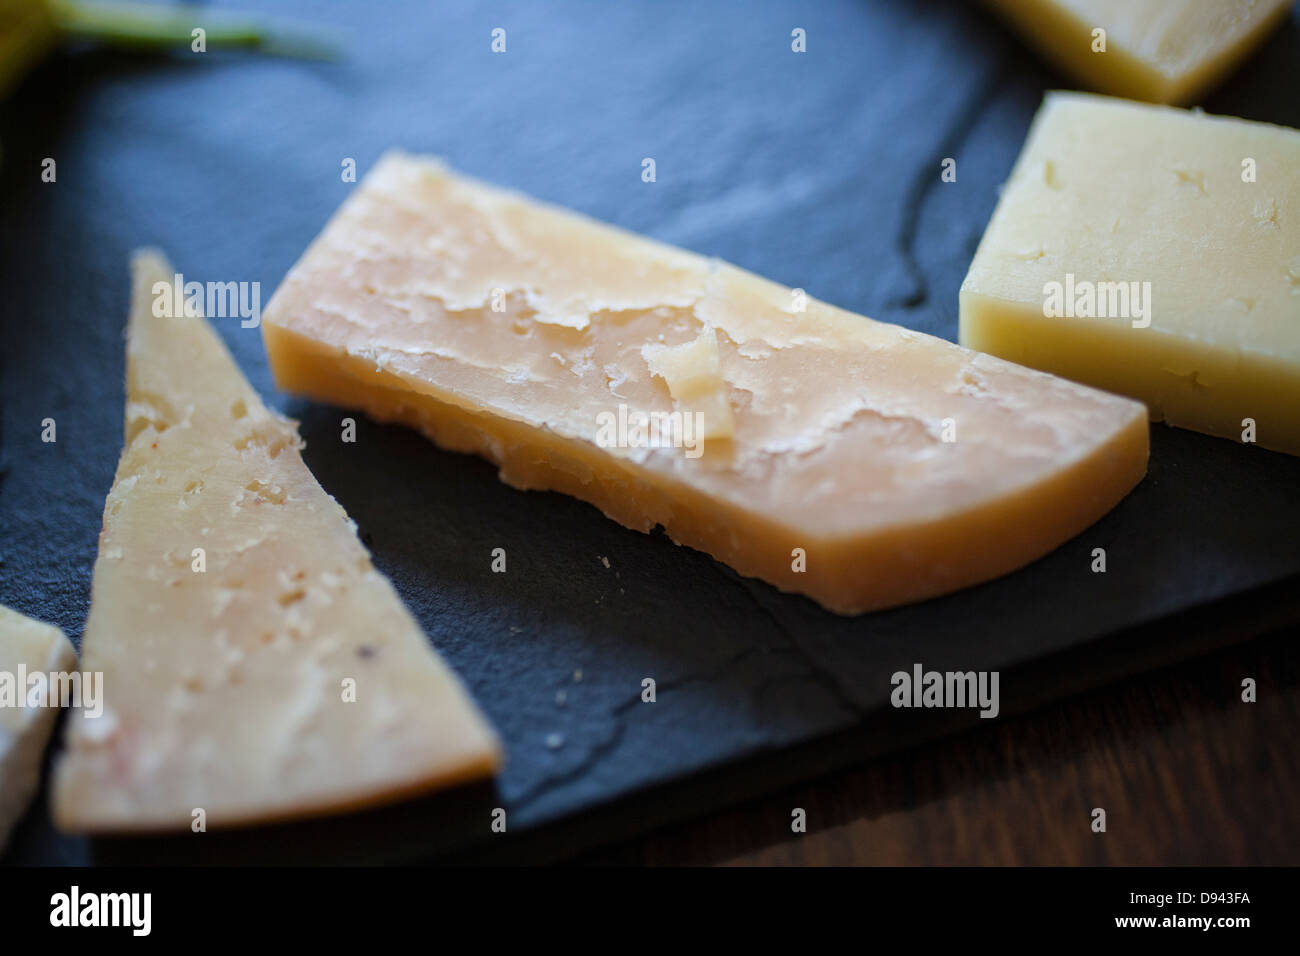 Muestras de cata de quesos cheddar gouda azul pizarra negra Foto de stock